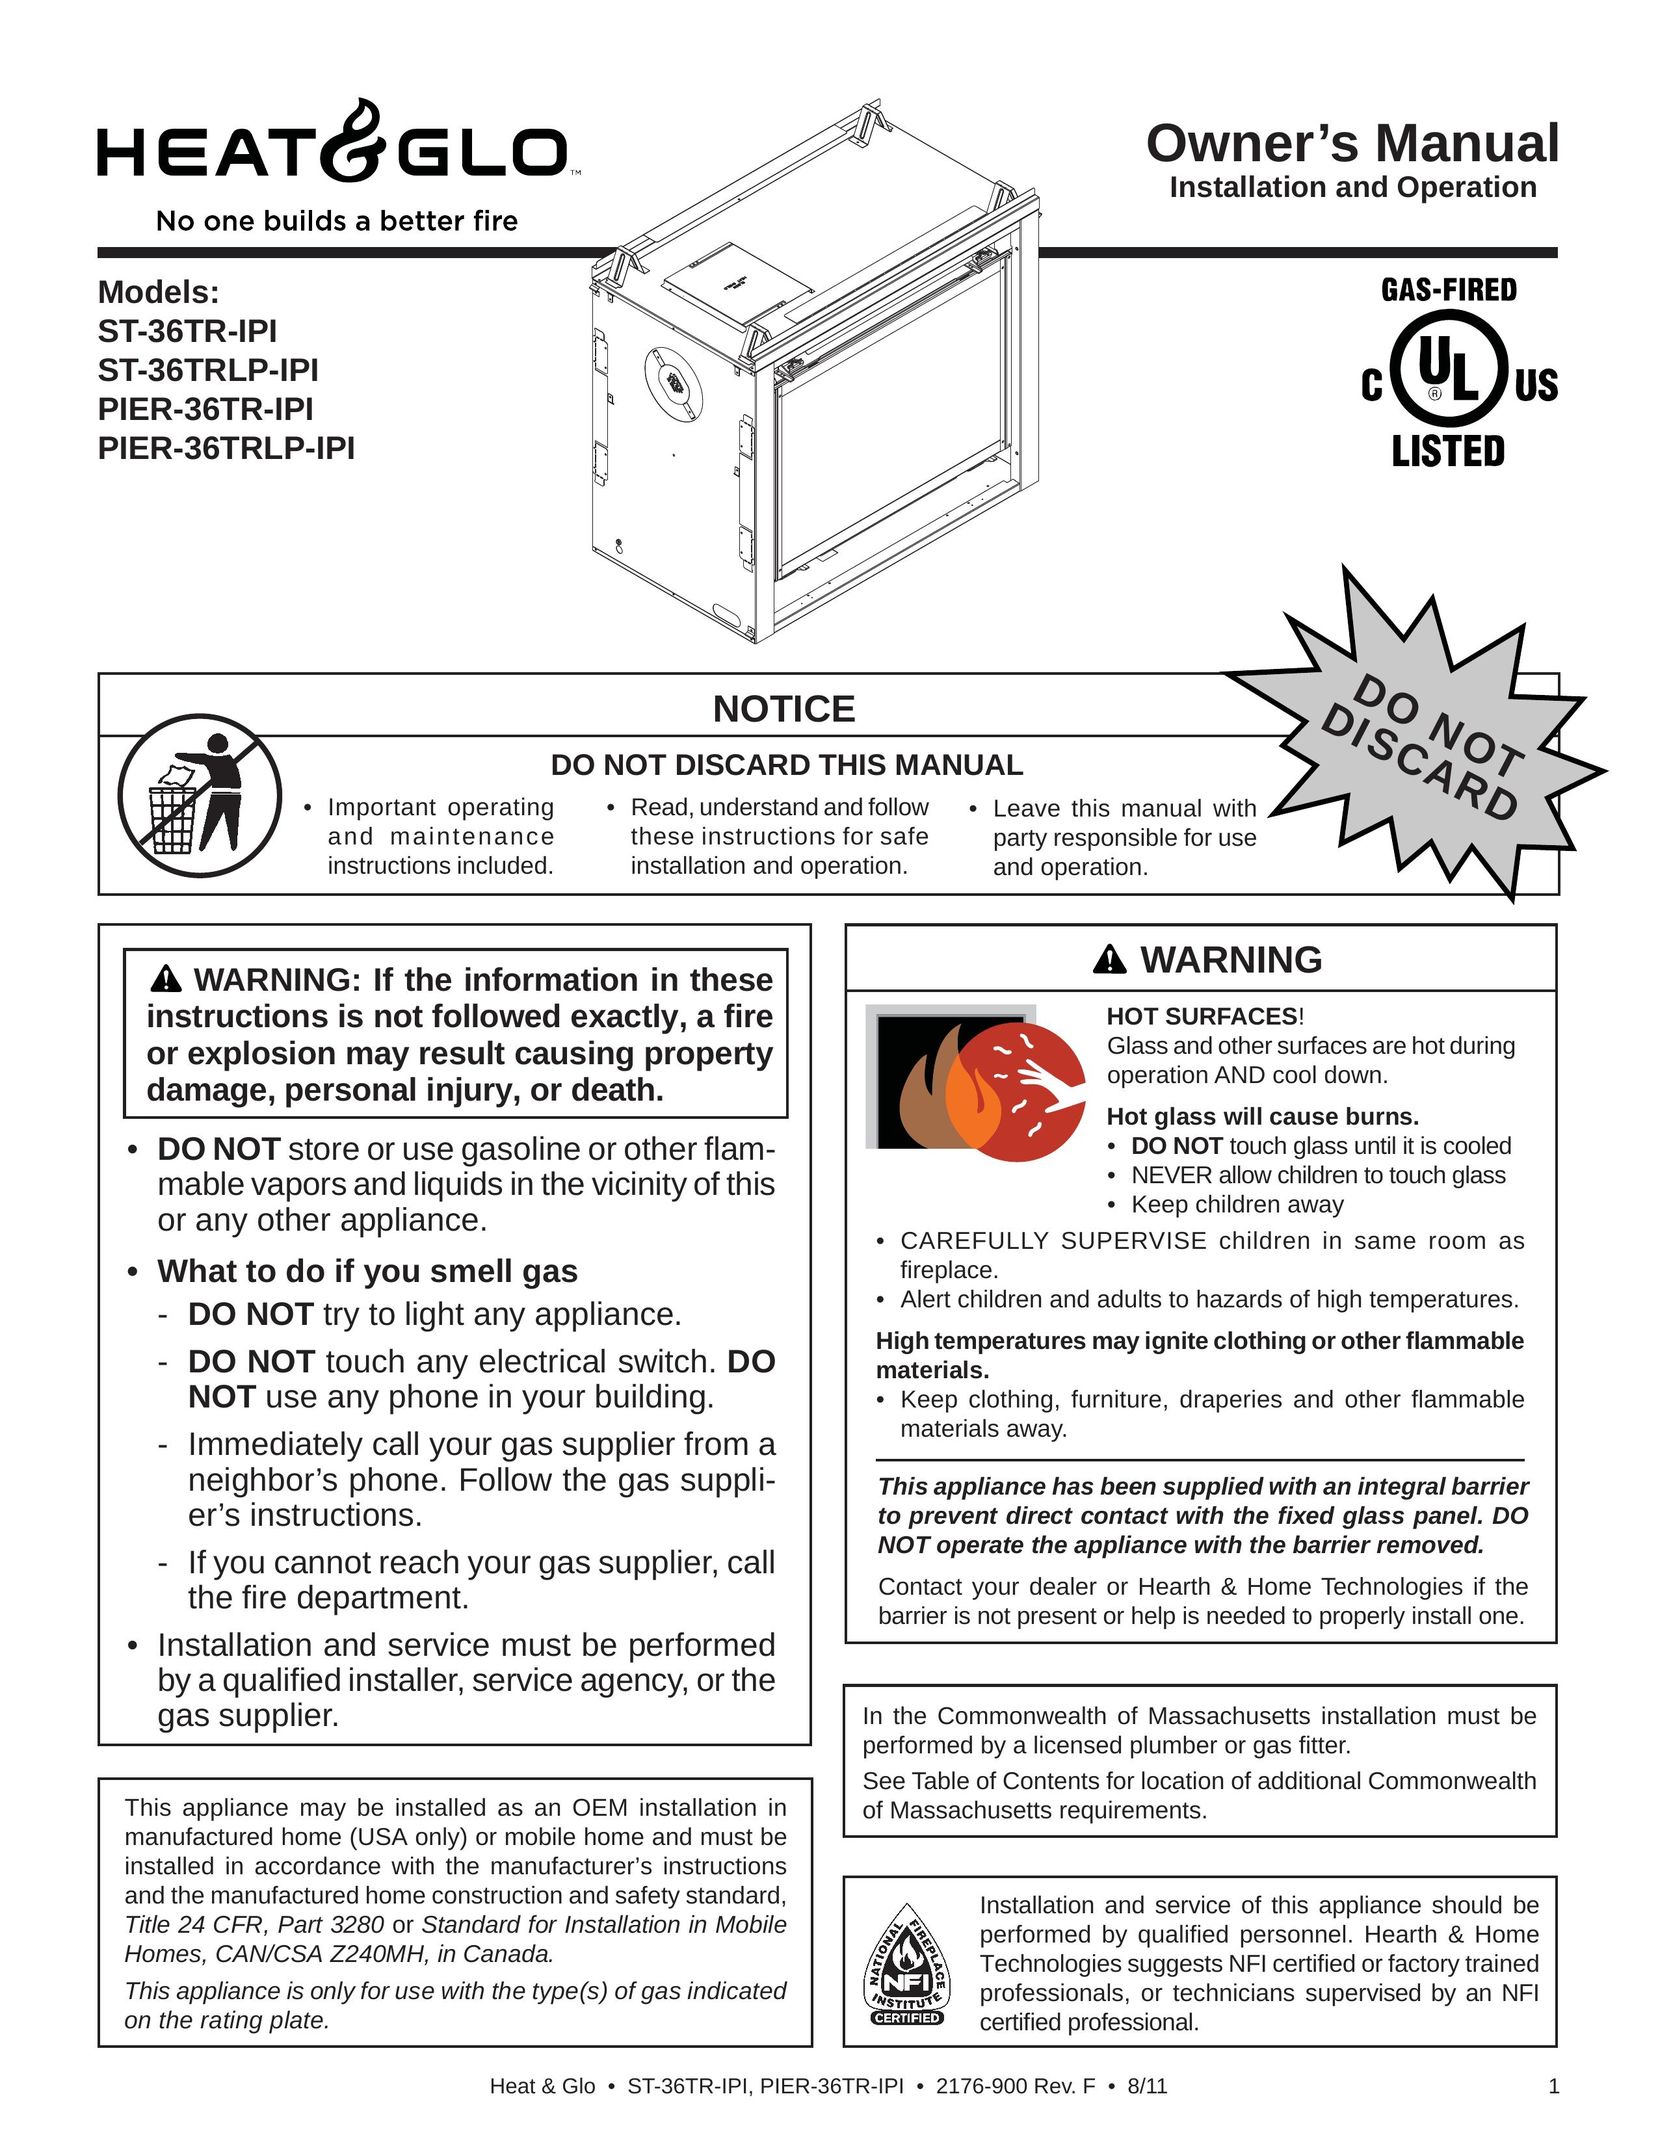 Heat & Glo LifeStyle ST-36TRLP-IPI Burner User Manual